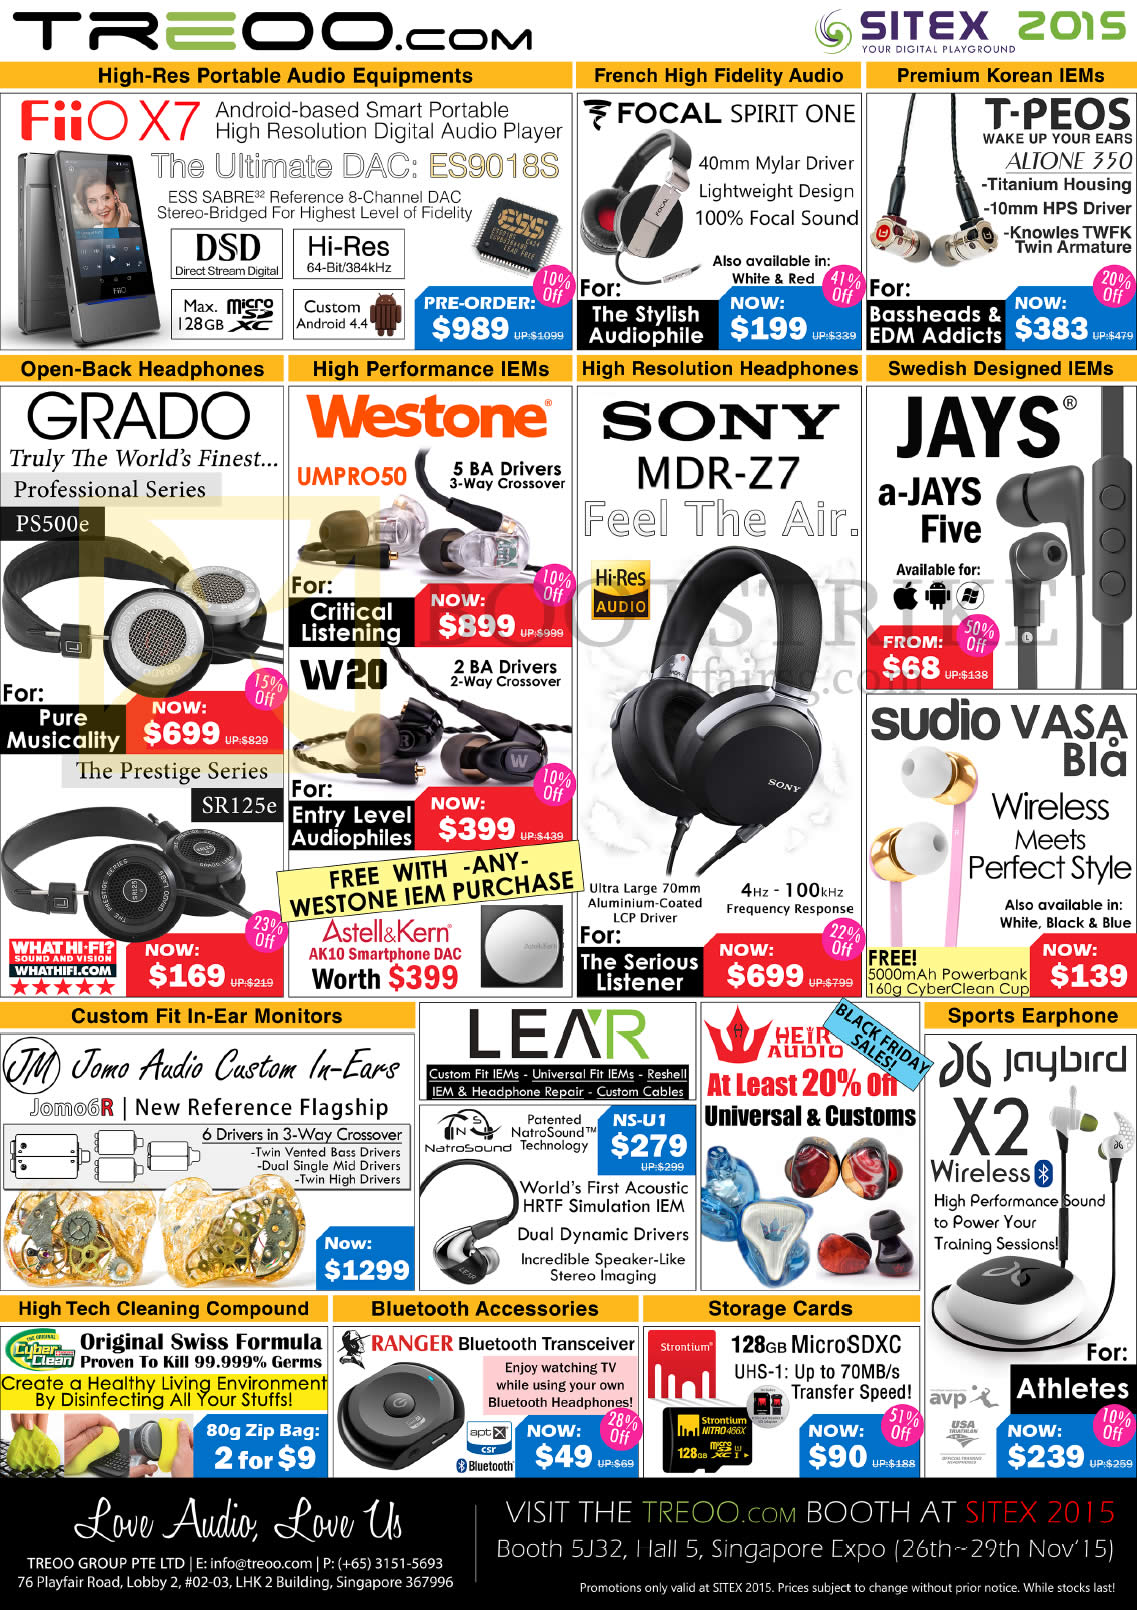 SITEX 2015 price list image brochure of Treoo Portable Audio Equipments, Headphones, IEMs, In-Ear Monitors, Bluetooth Accessories, Storage Cards, Sports Earphone